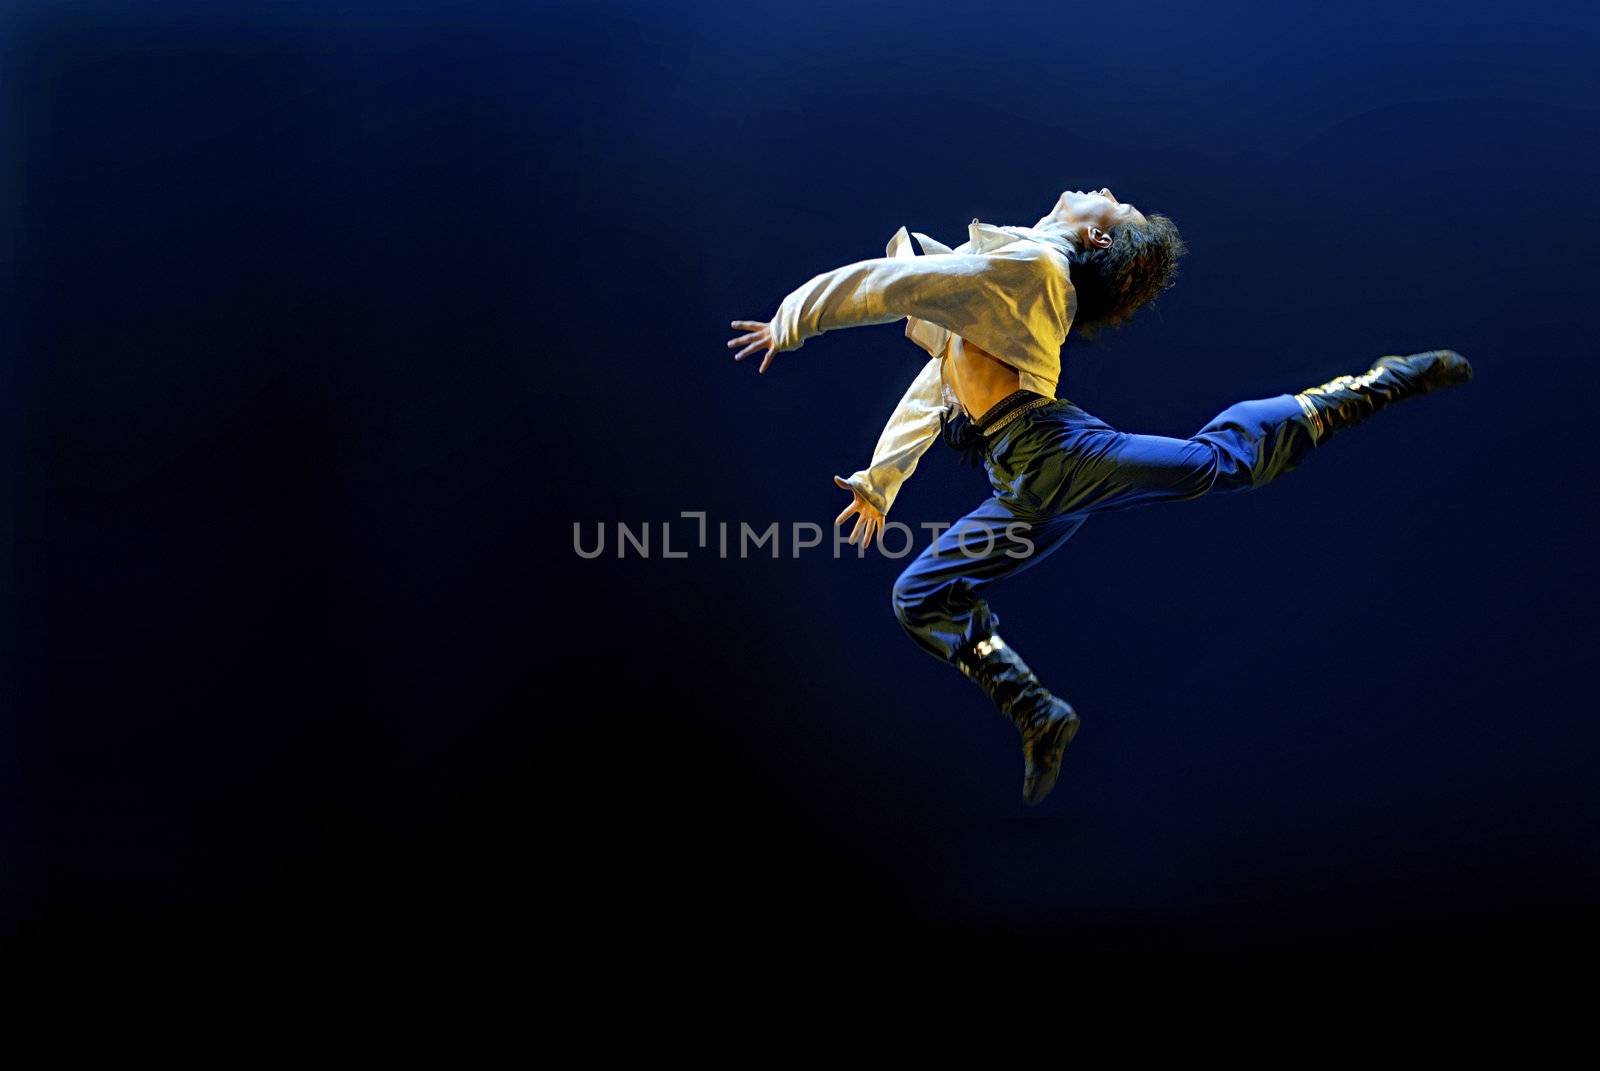 Jumping modern dancer by jackq